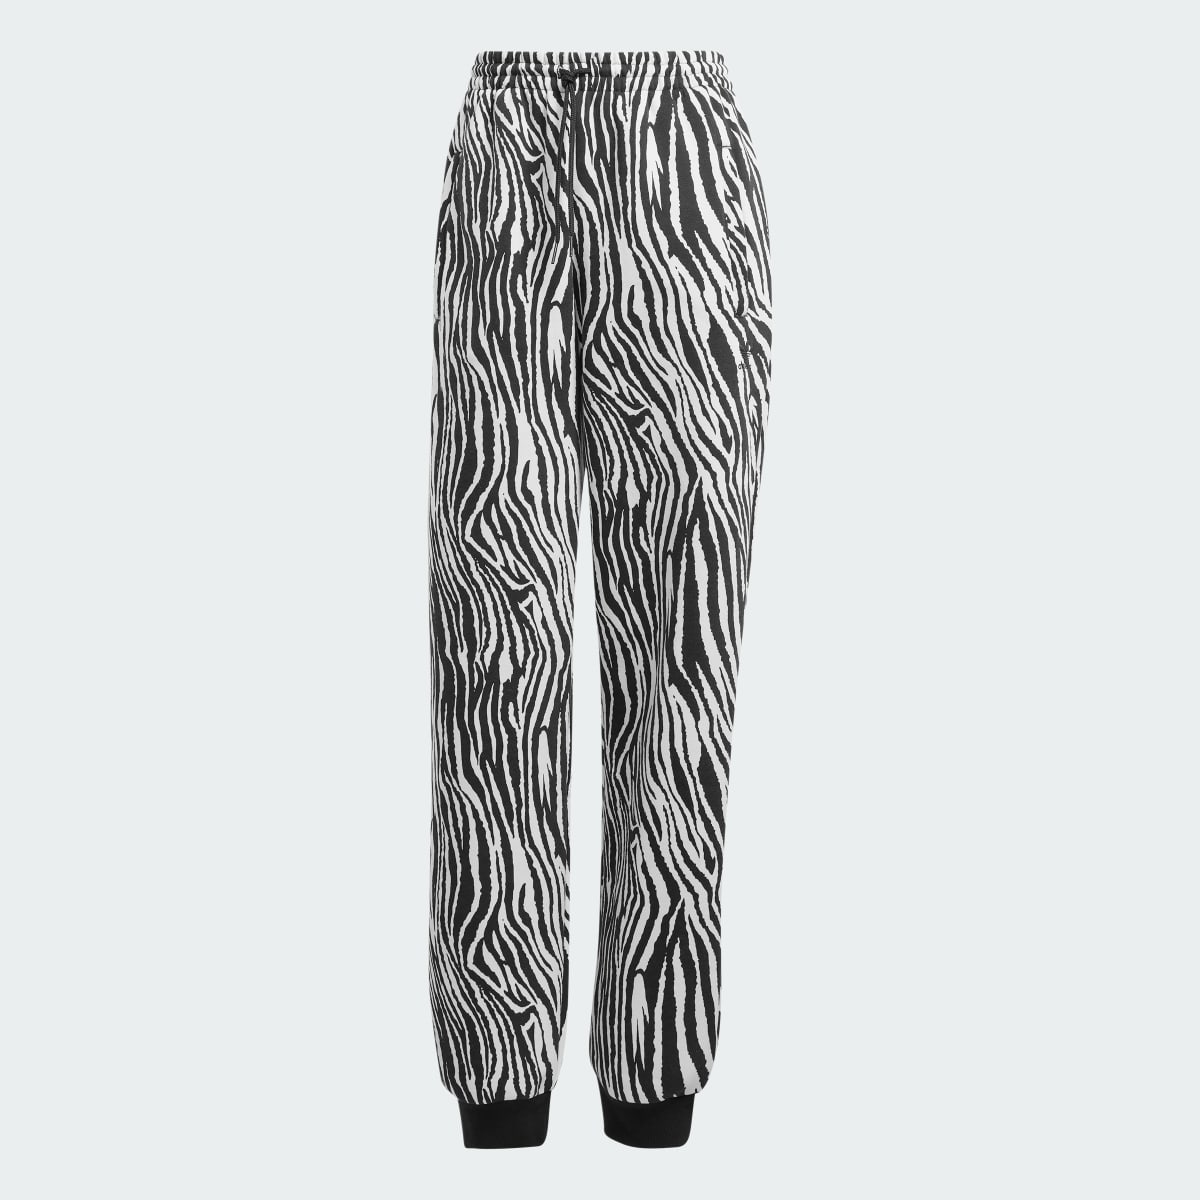 Adidas Allover Zebra Animal Print Essentials Joggers. 4